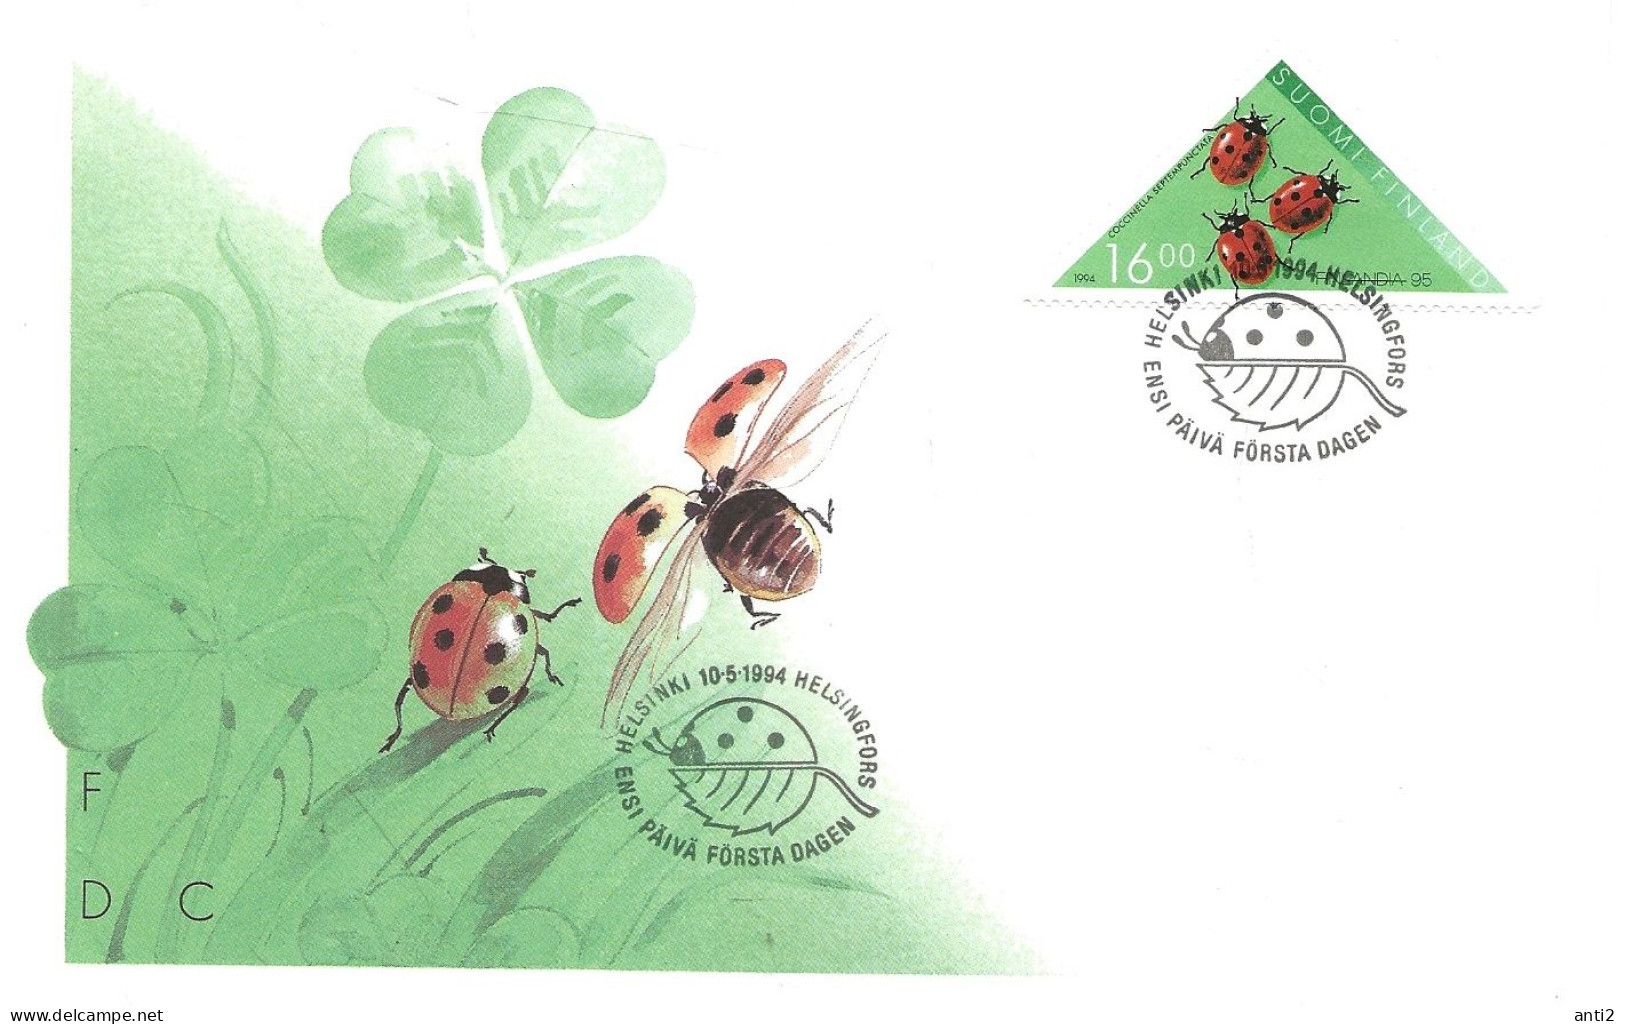 Finland   1994  International Stamp Exhibition FINLANDIA '95, Helsinki,  Ladybug  Mi 1255  FDC - Covers & Documents